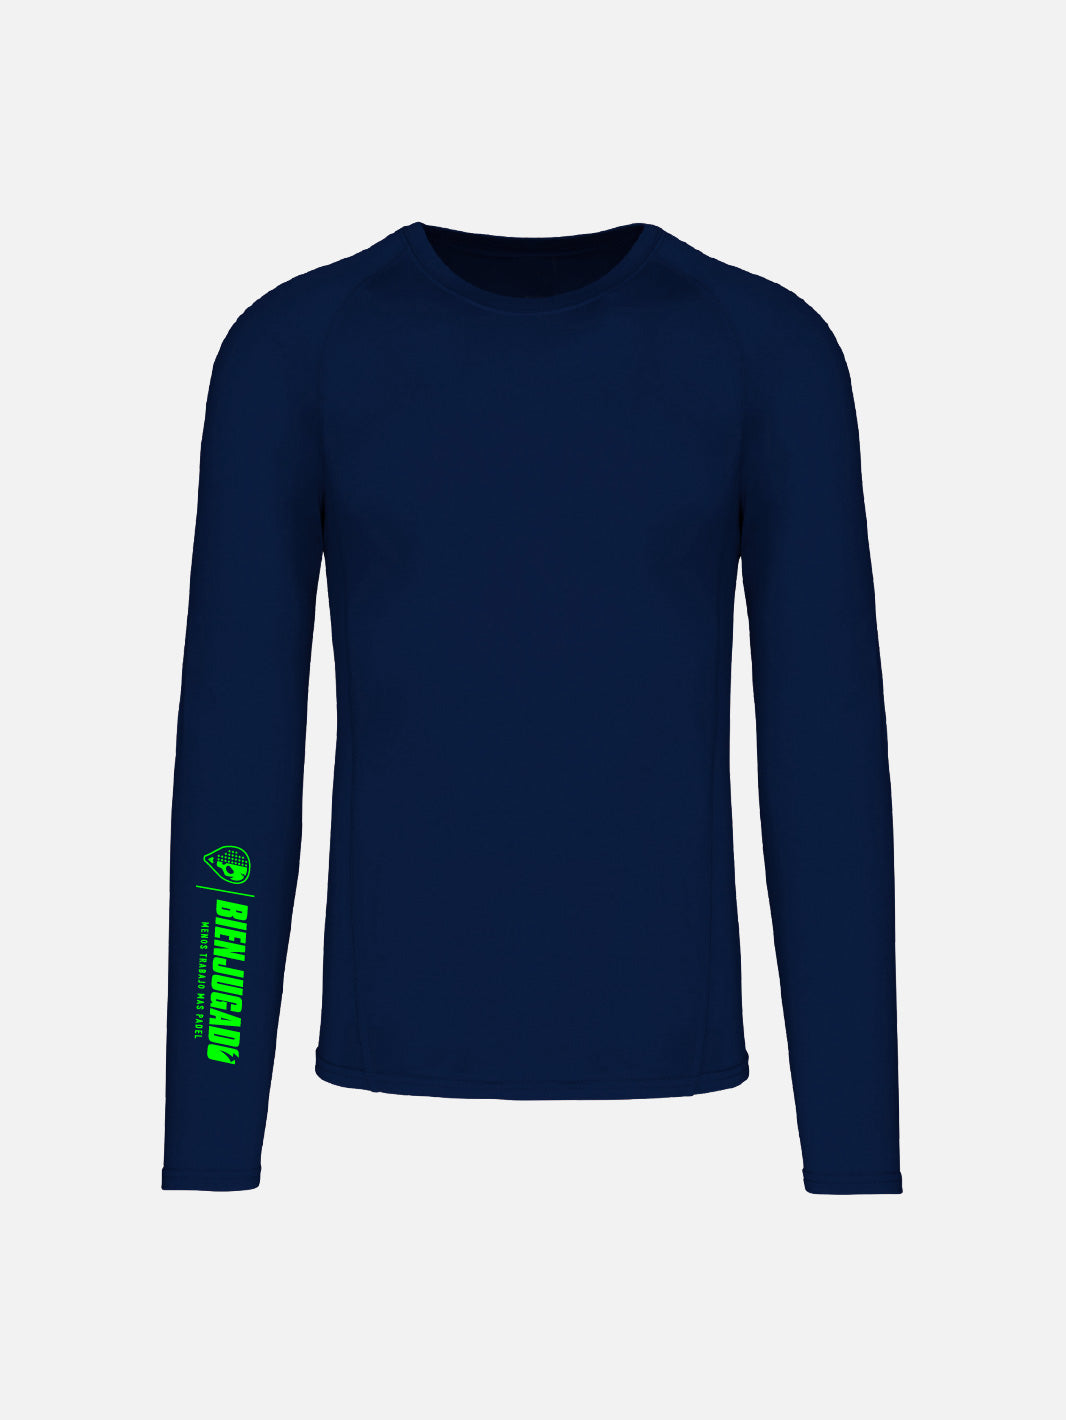 Unisex Thermal Shirt - Navy